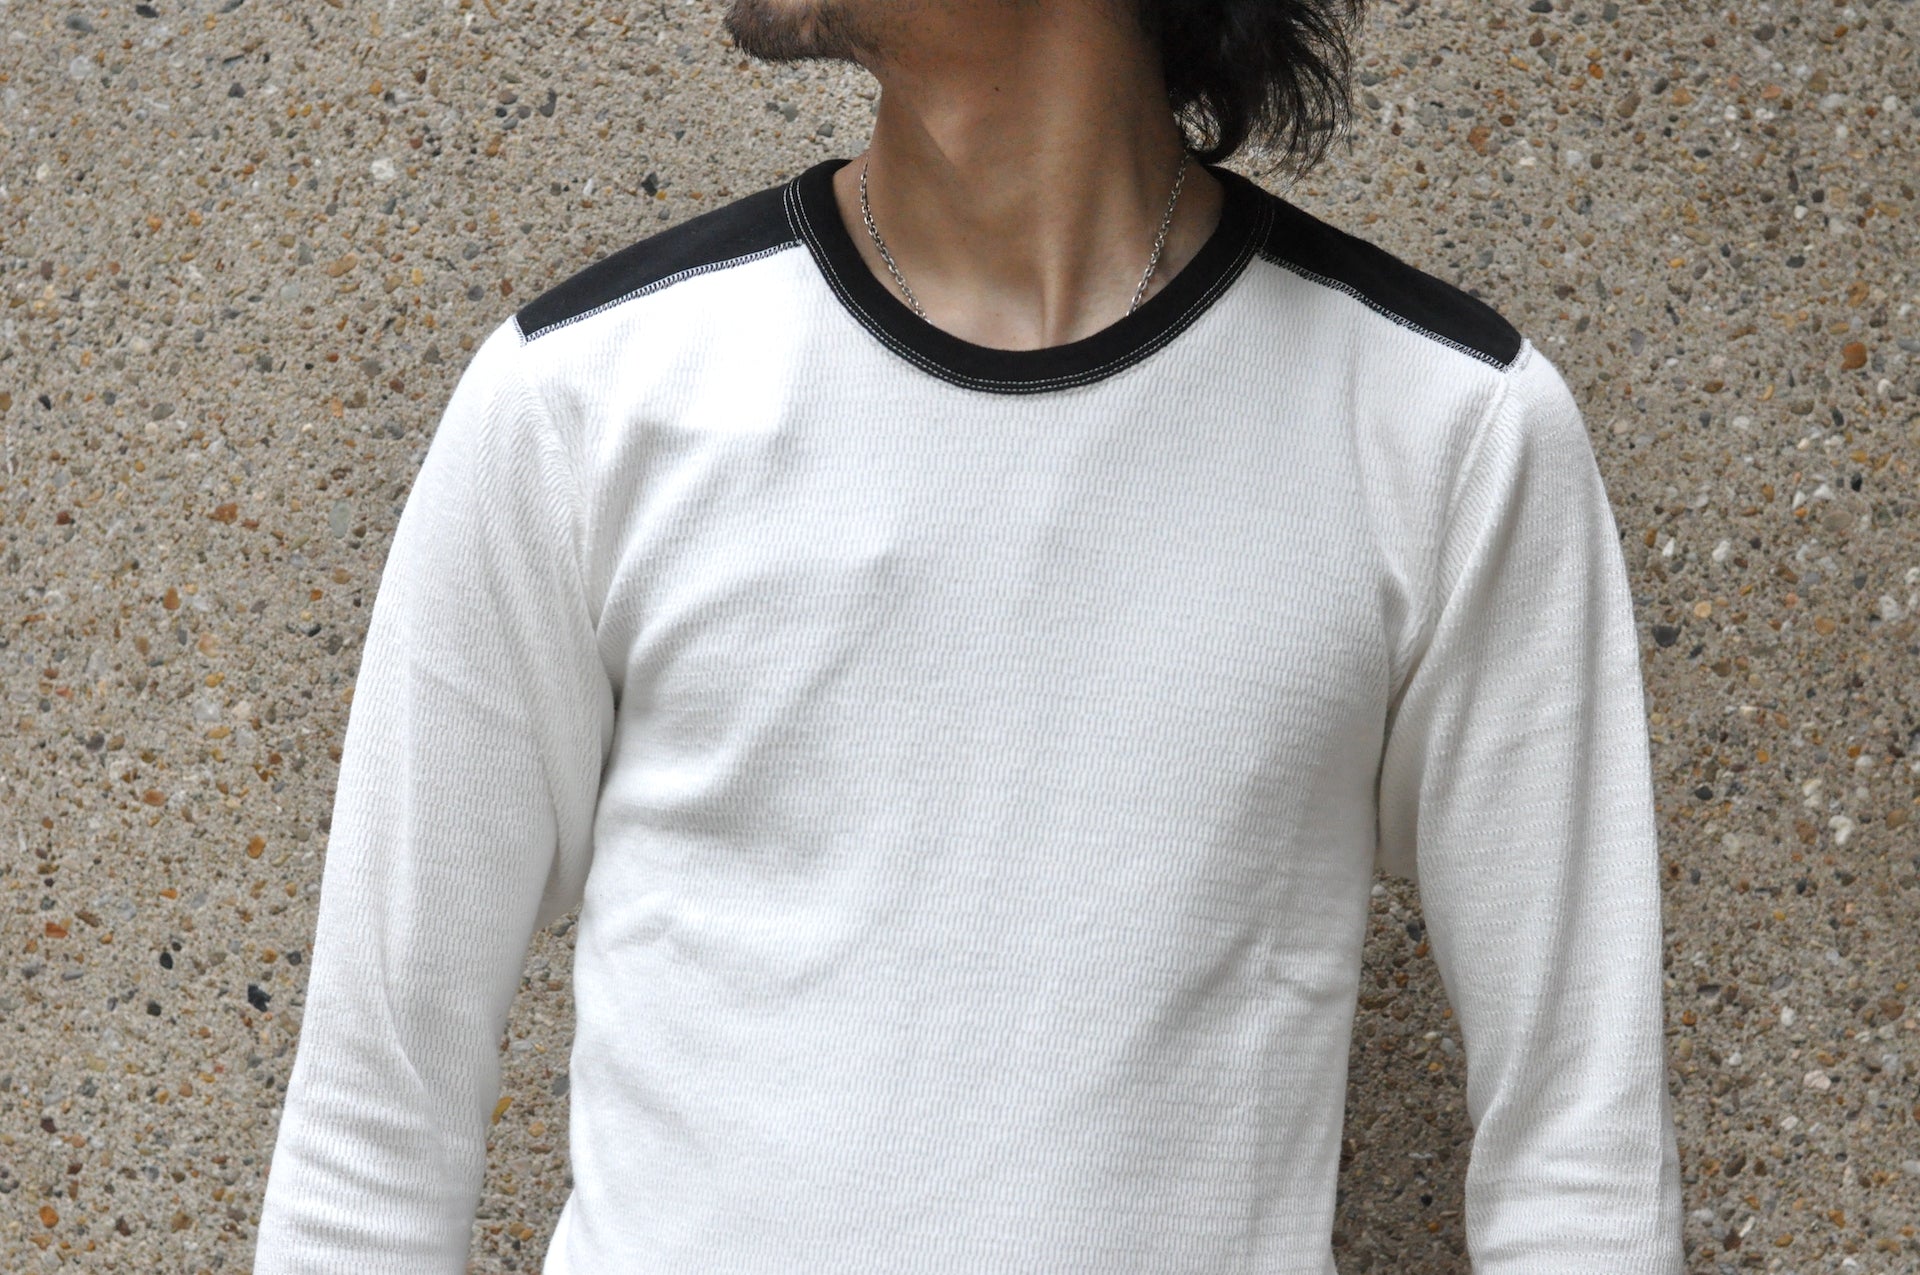 The Flat Head "Panneled" L/S Thermal Shirt (White X Black)